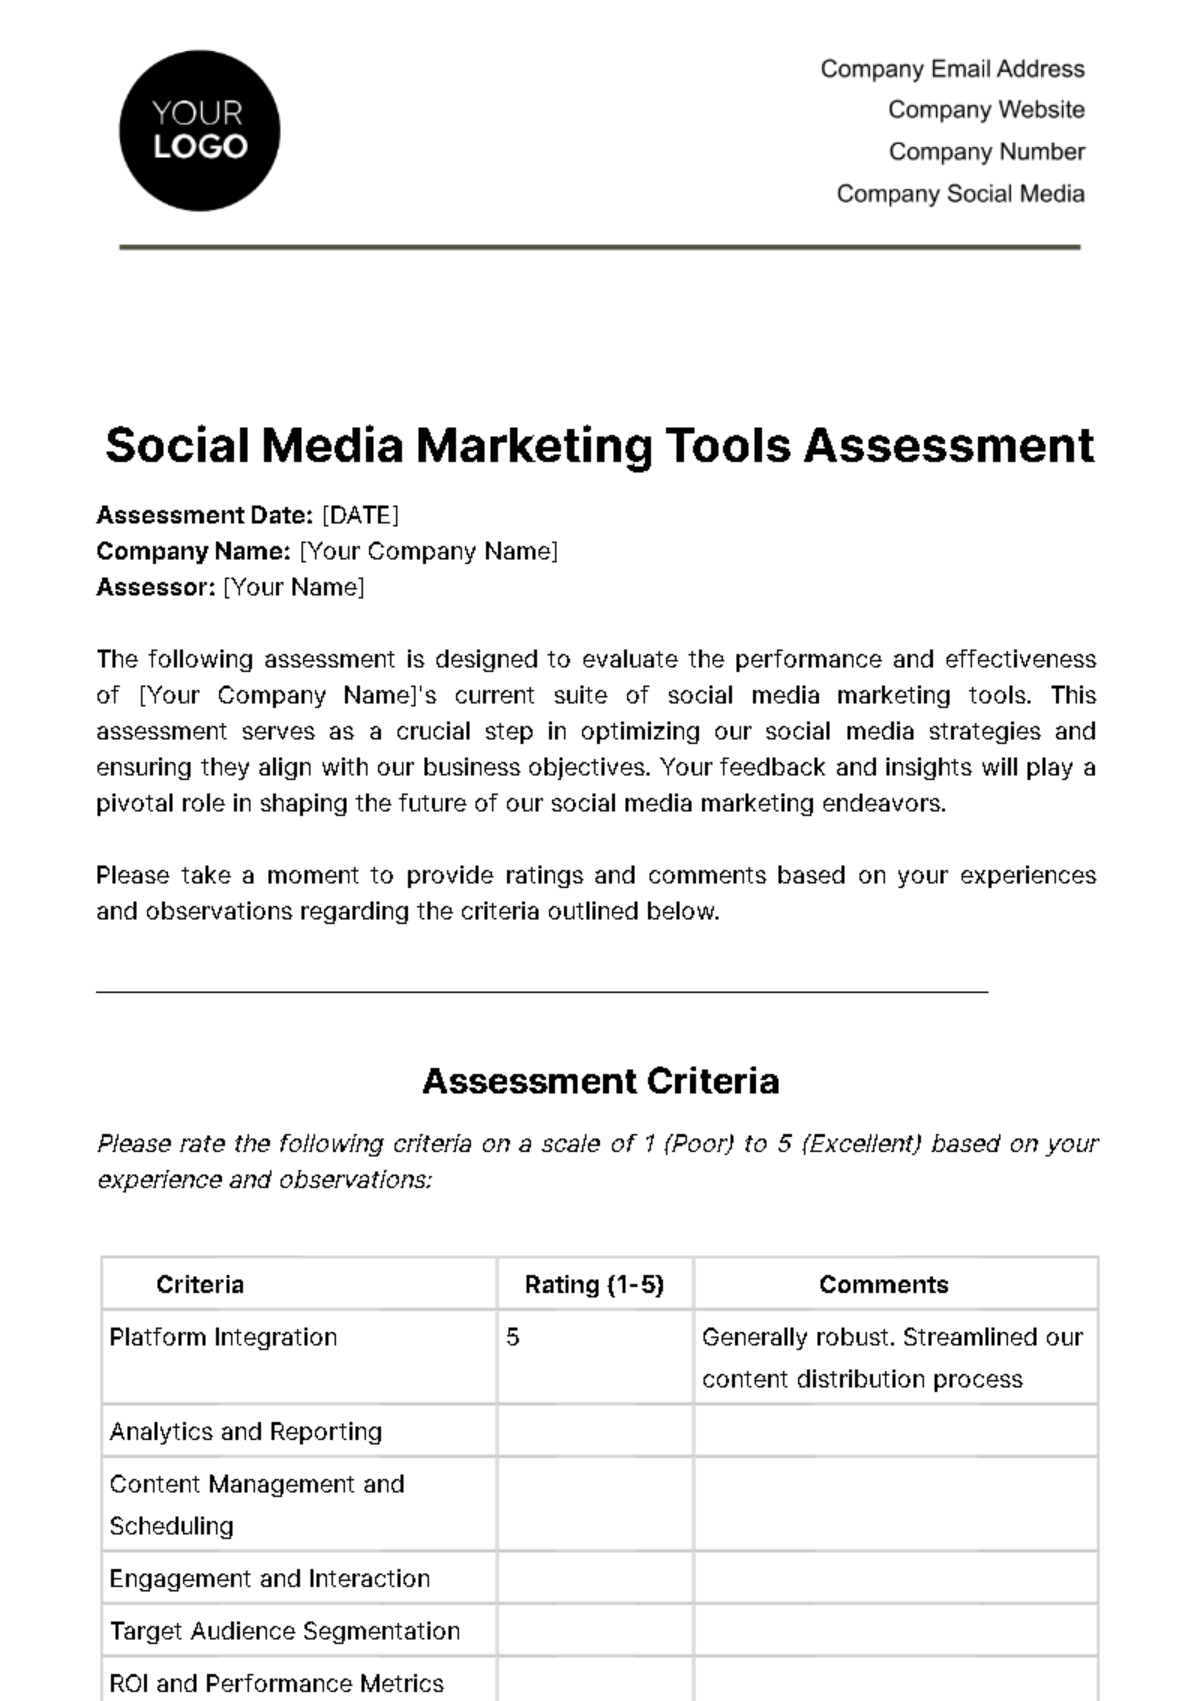 Free Social Media Marketing Tools Assessment Template